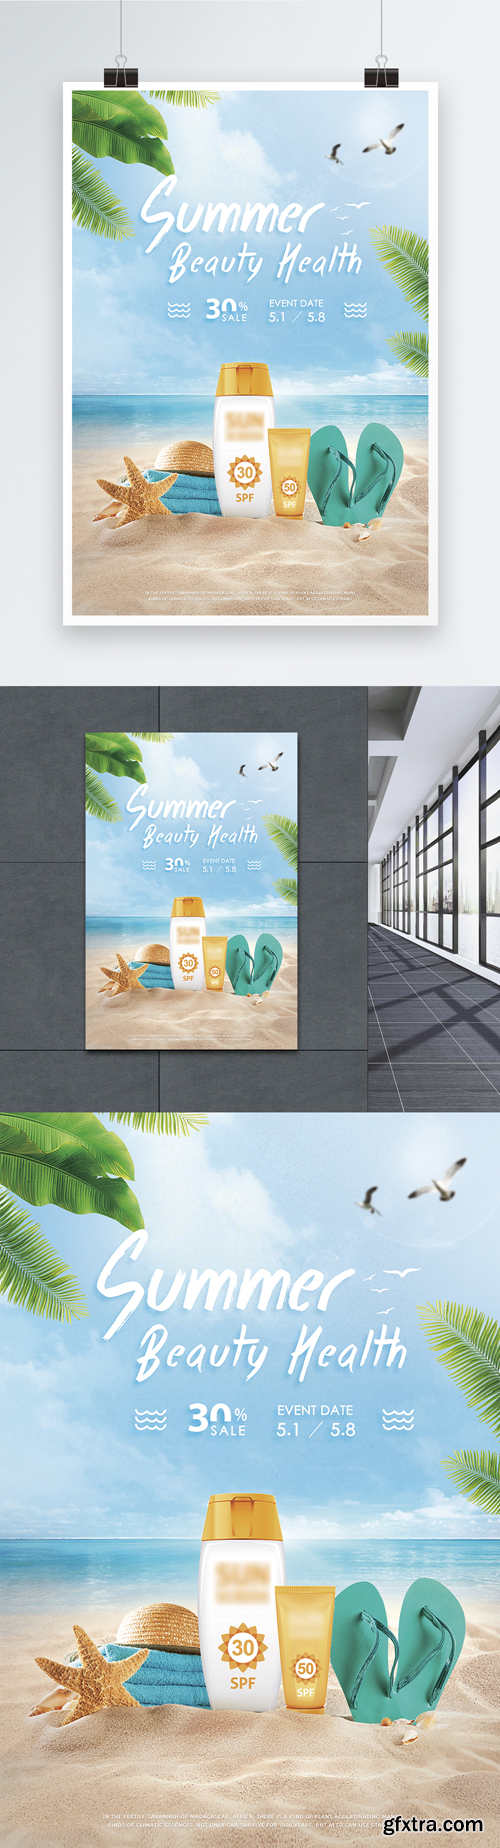 summer sunscreen cosmetics posters